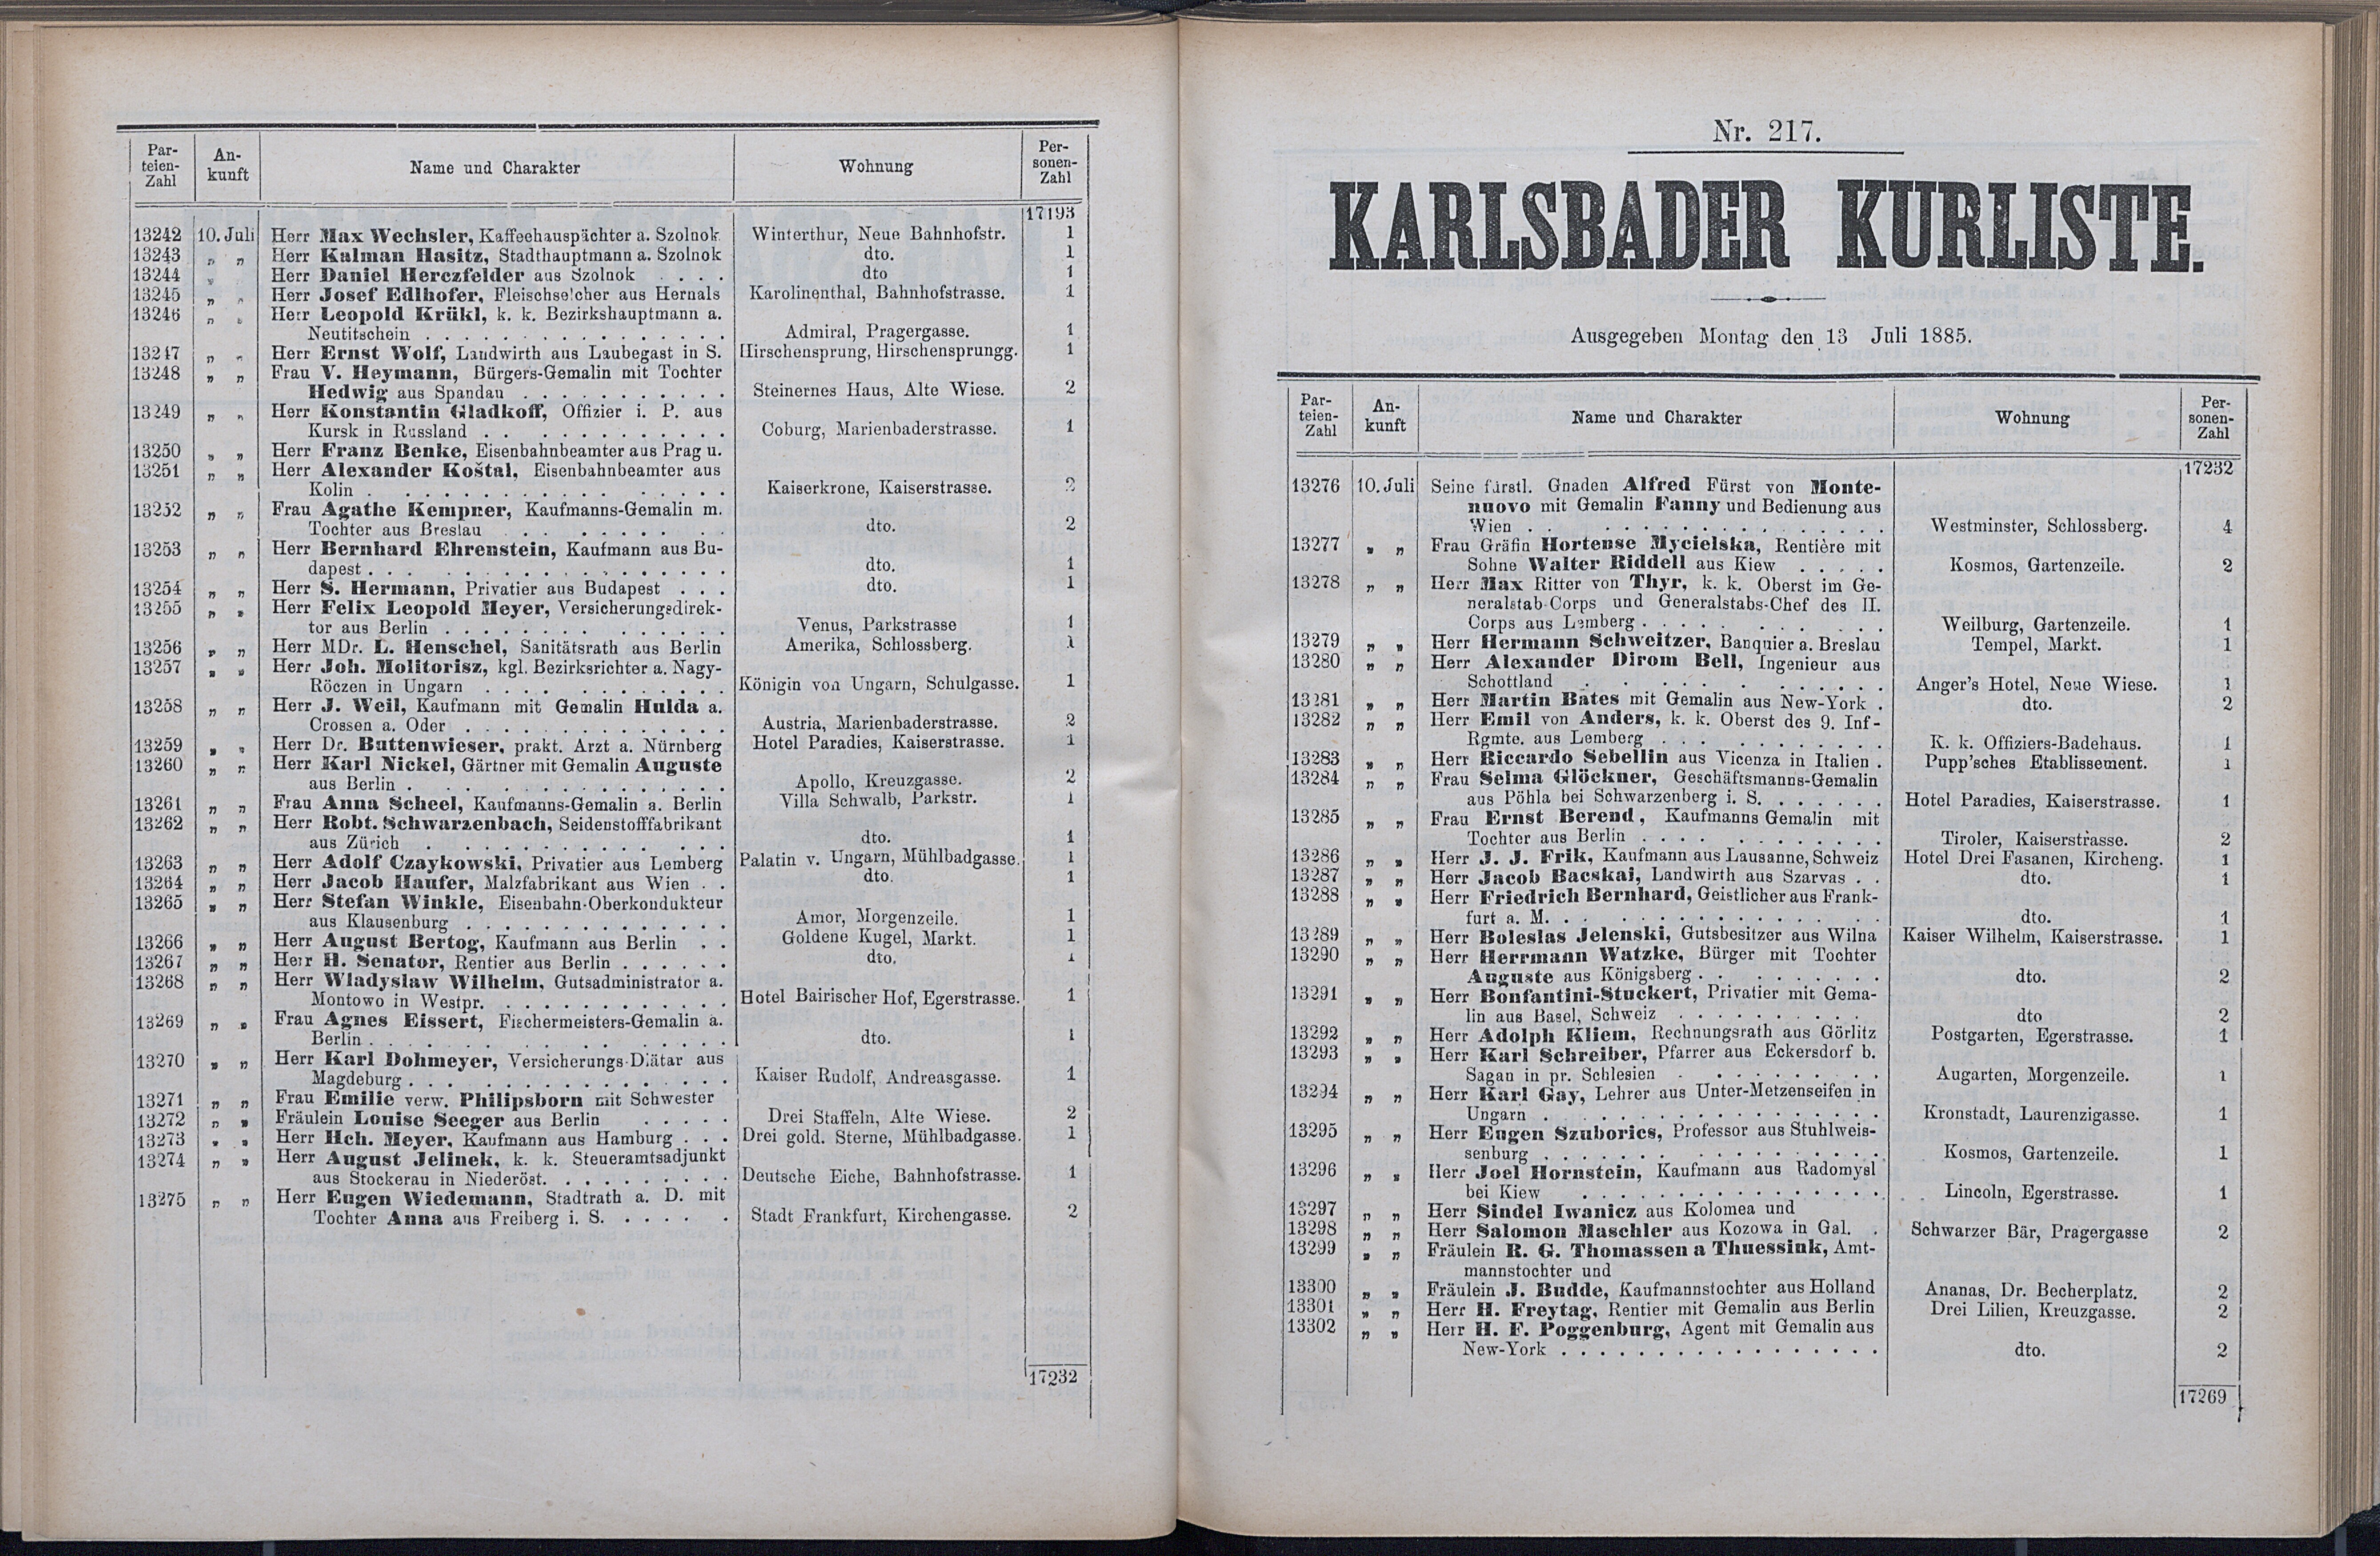 269. soap-kv_knihovna_karlsbader-kurliste-1885_2700